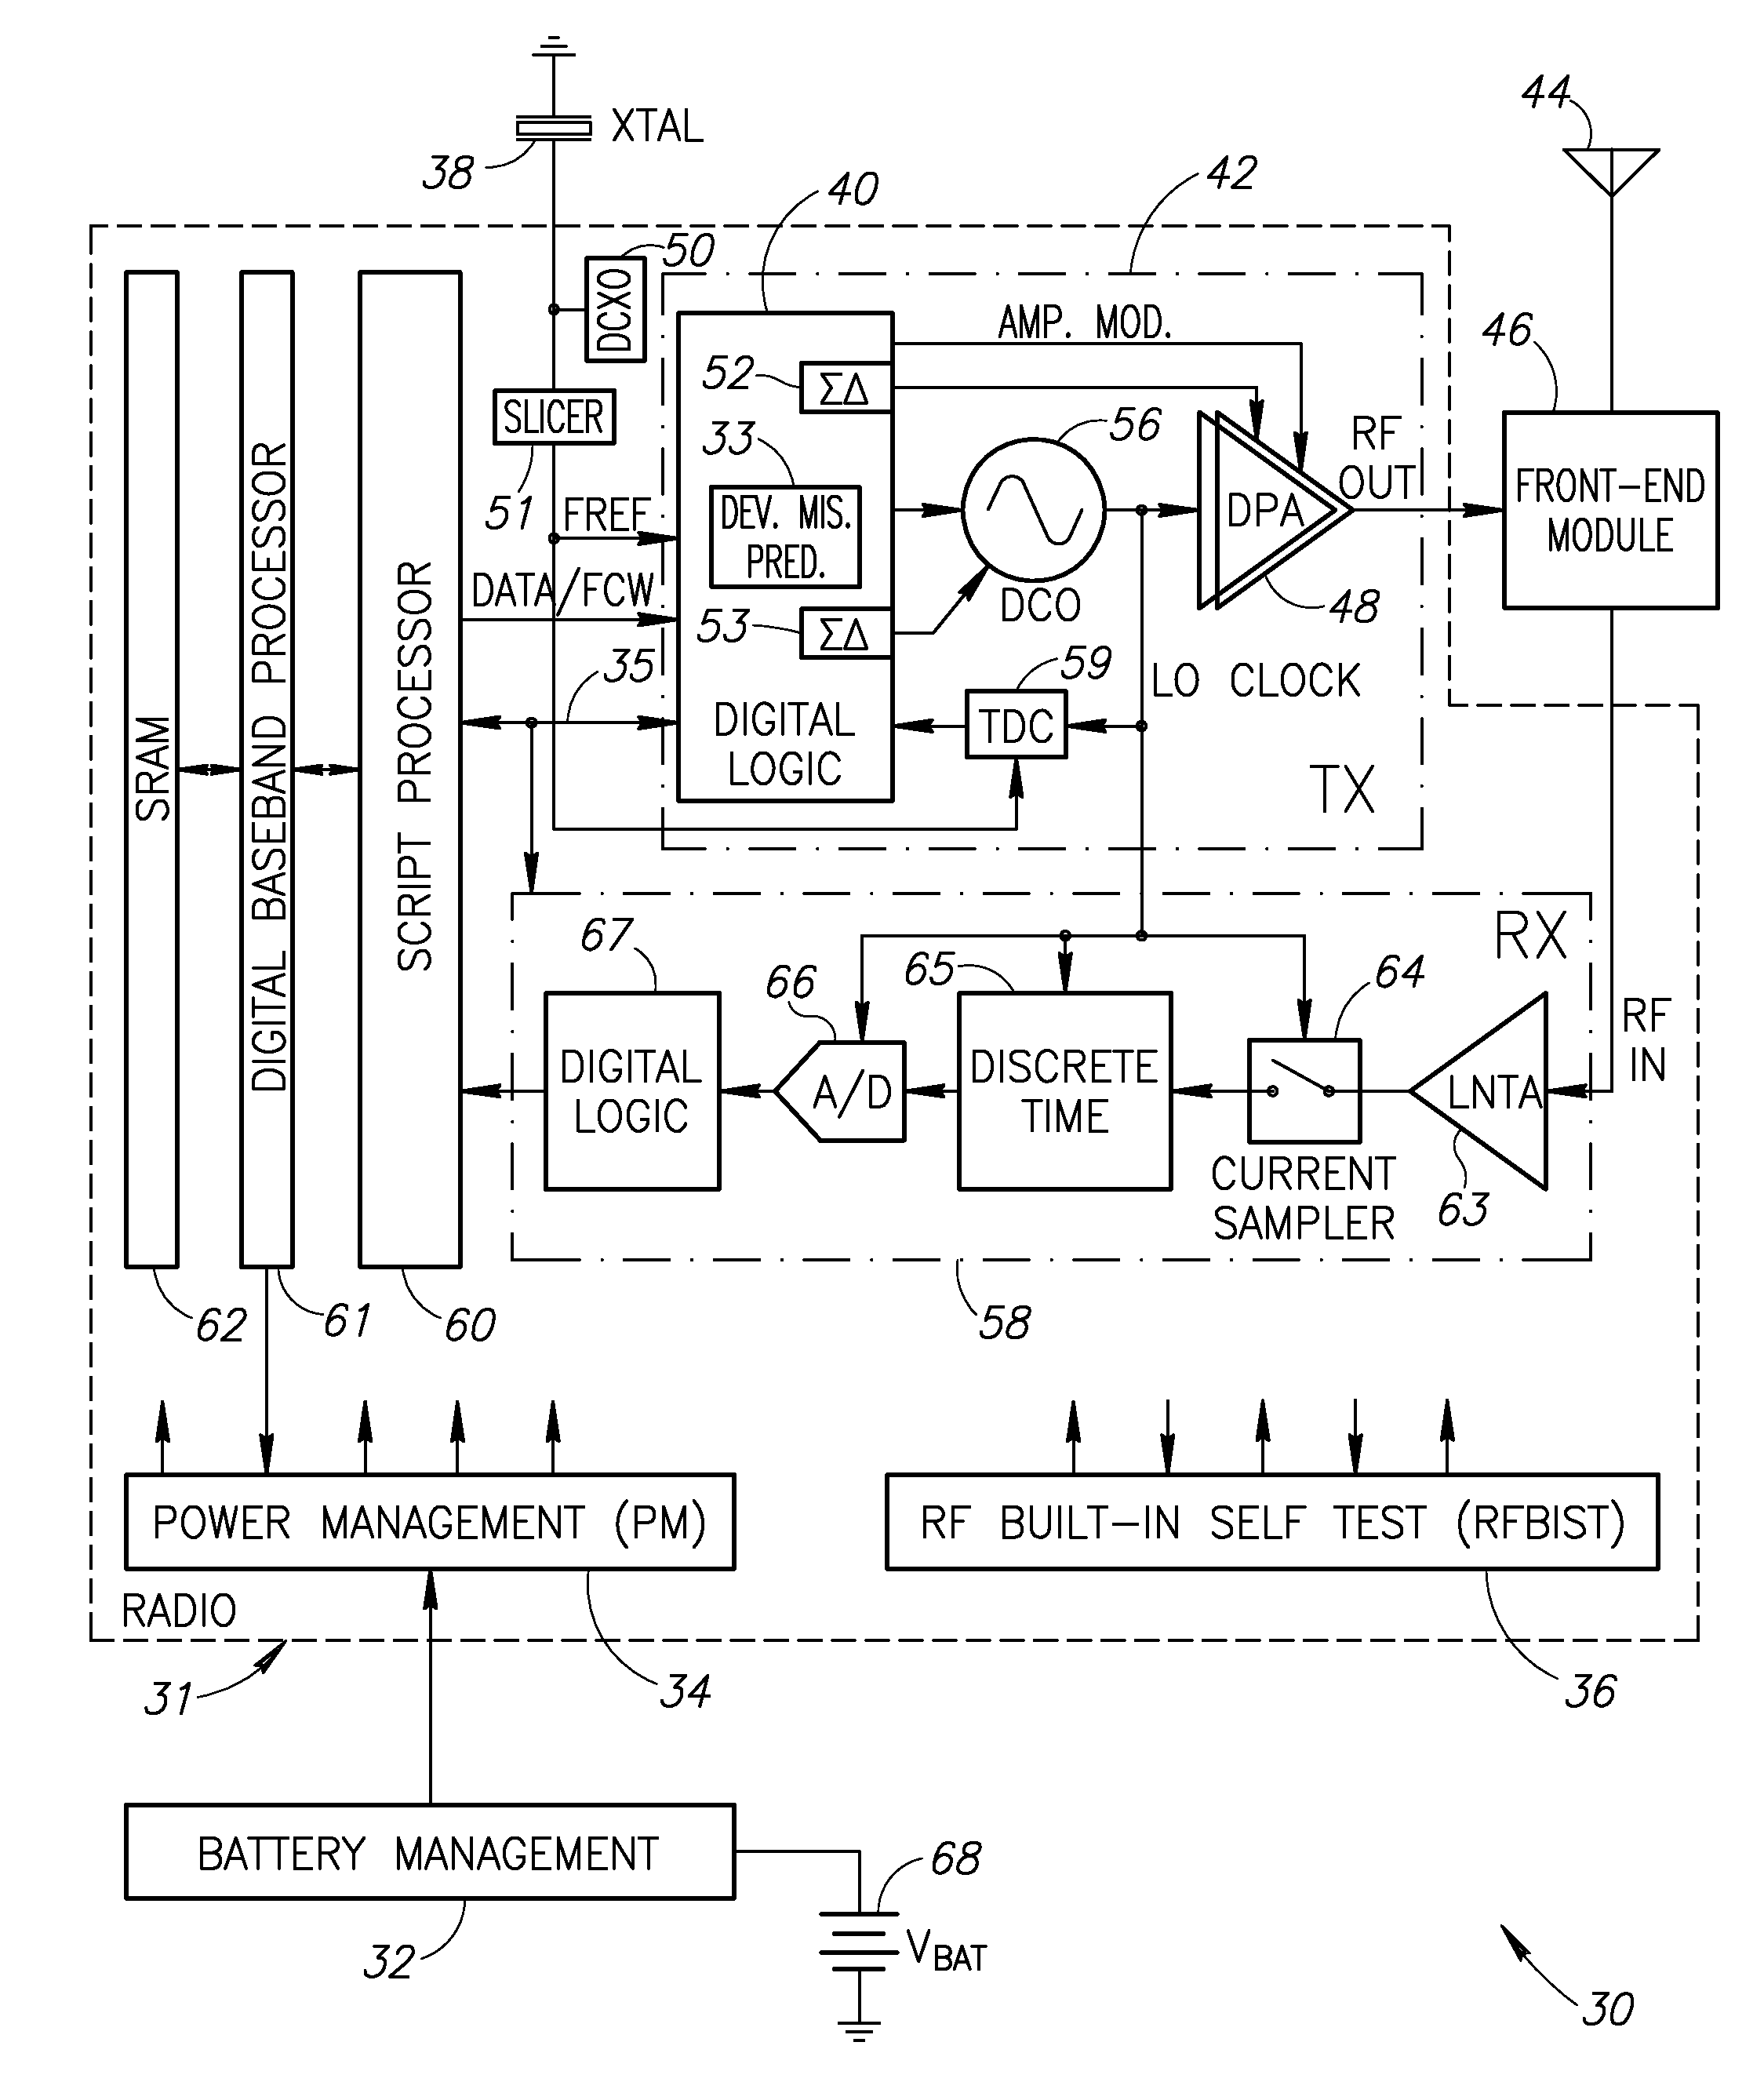 Predistortion mechanism for compensation of transistor size mismatch in a digital power amplifier